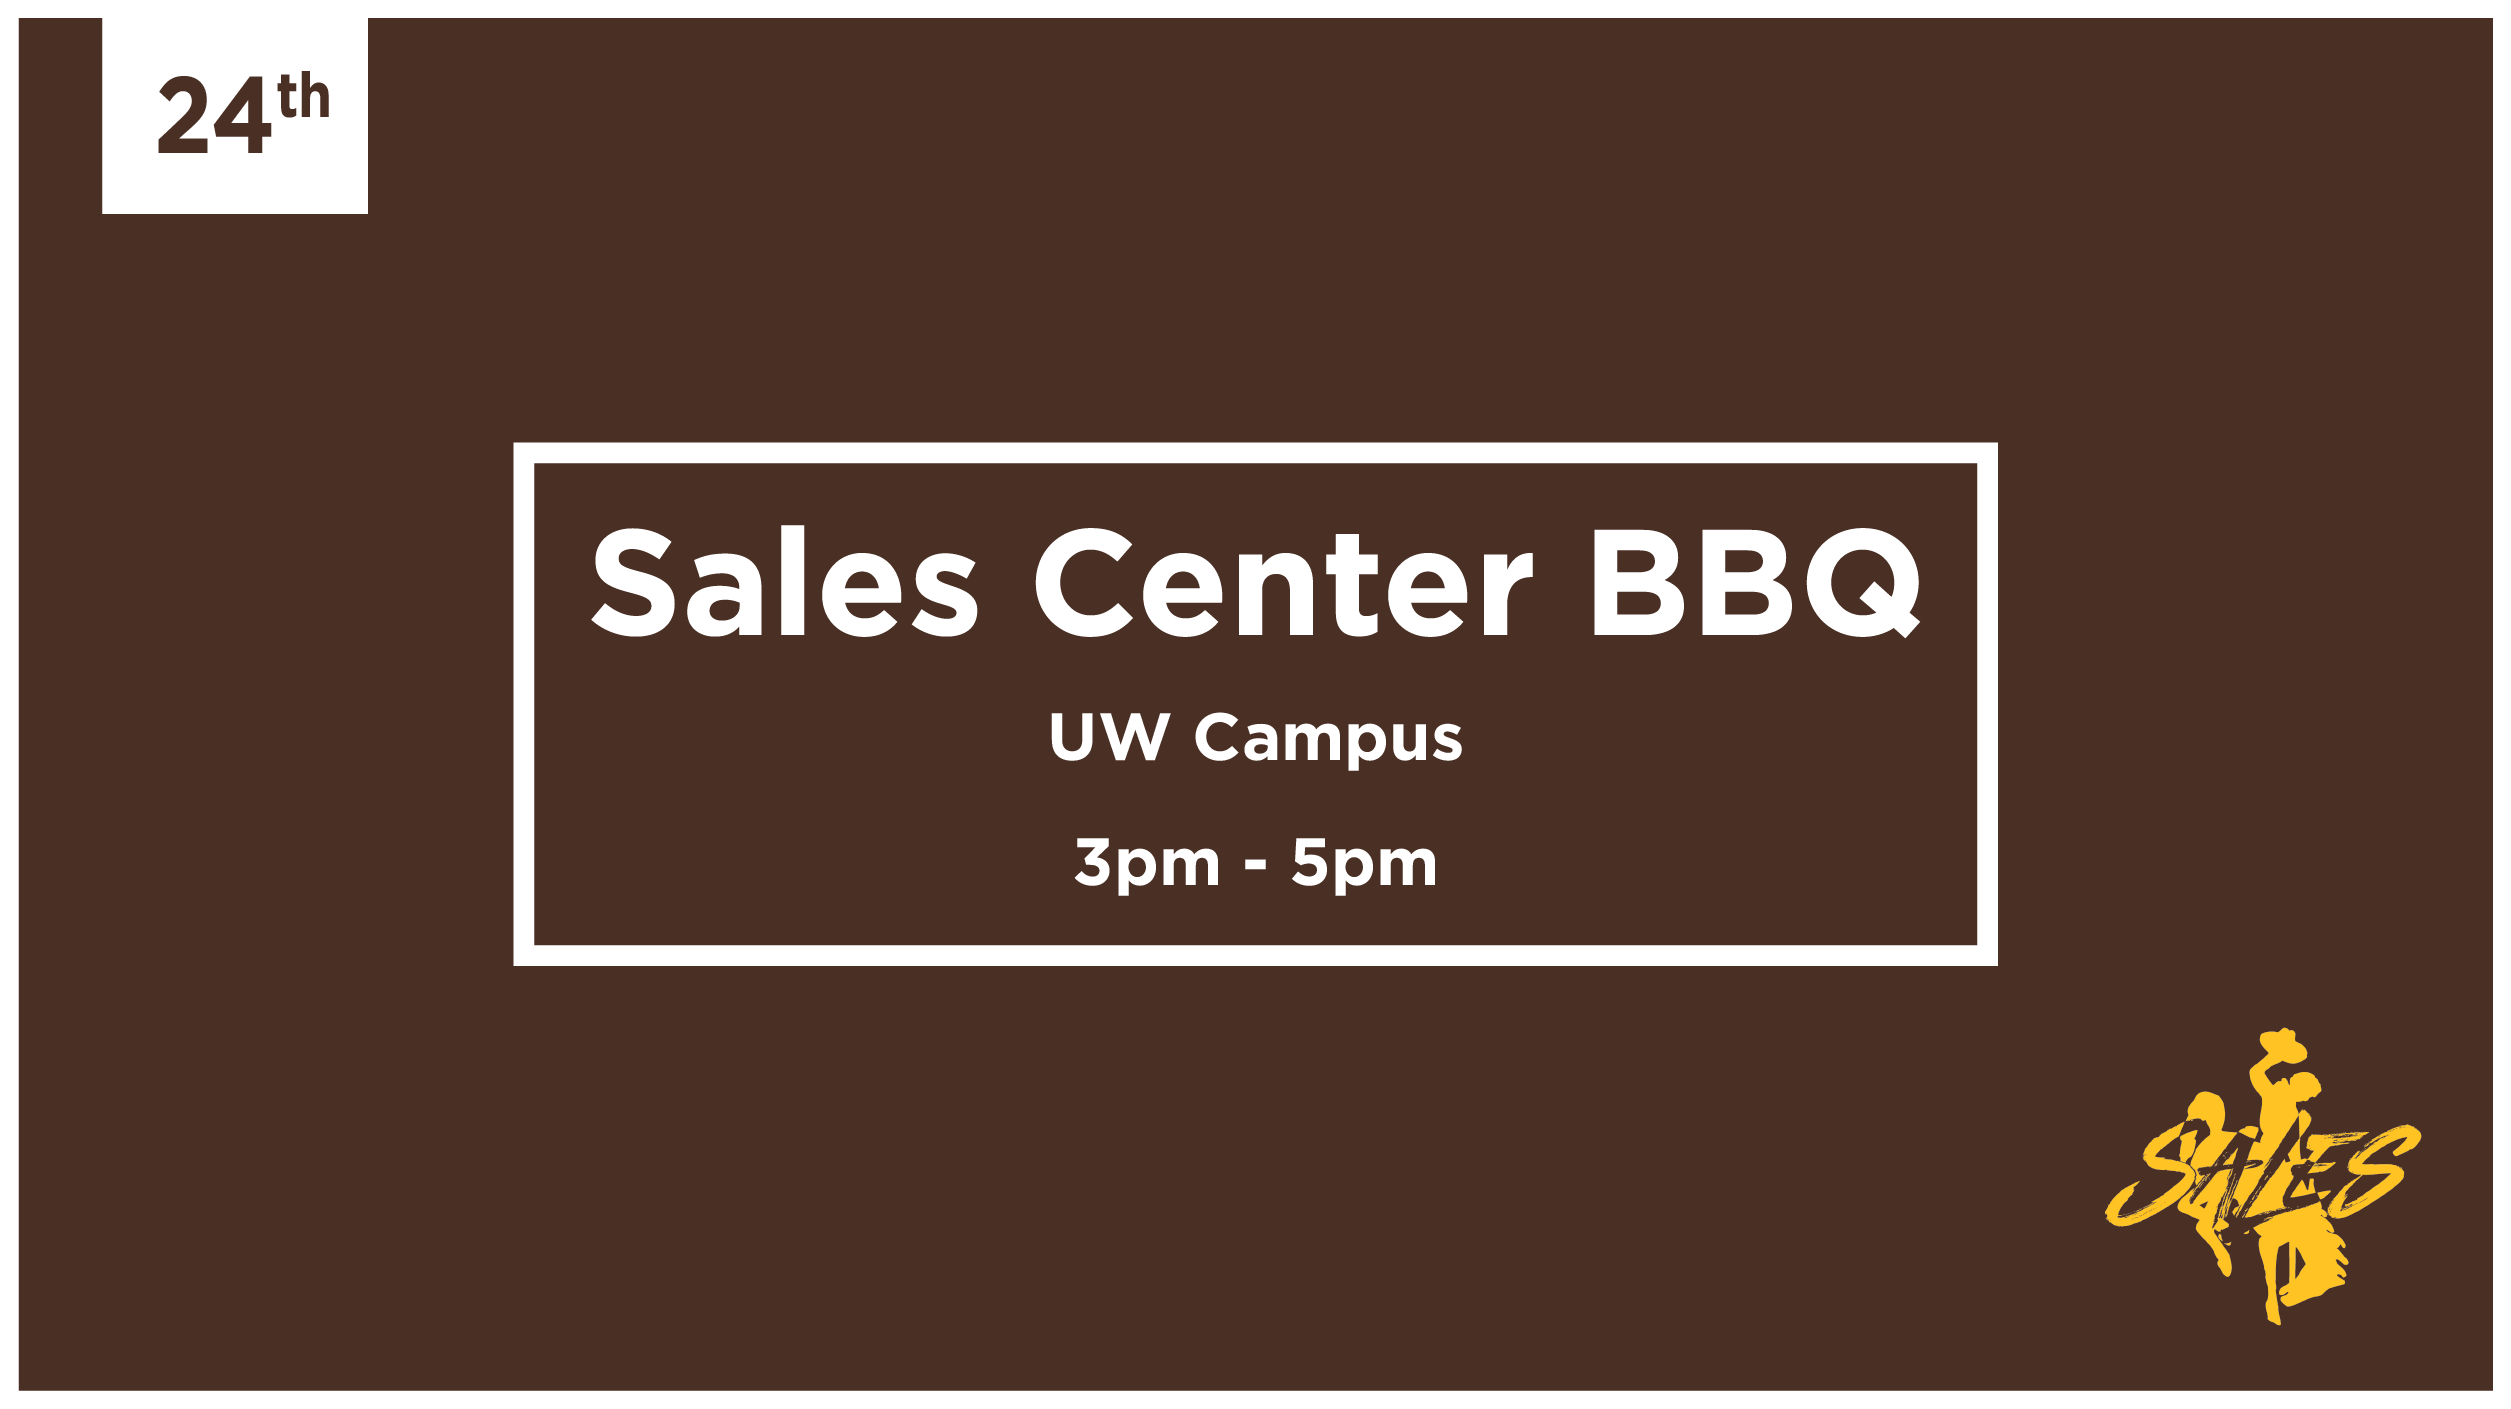 Sales Center BBQ September 24th 